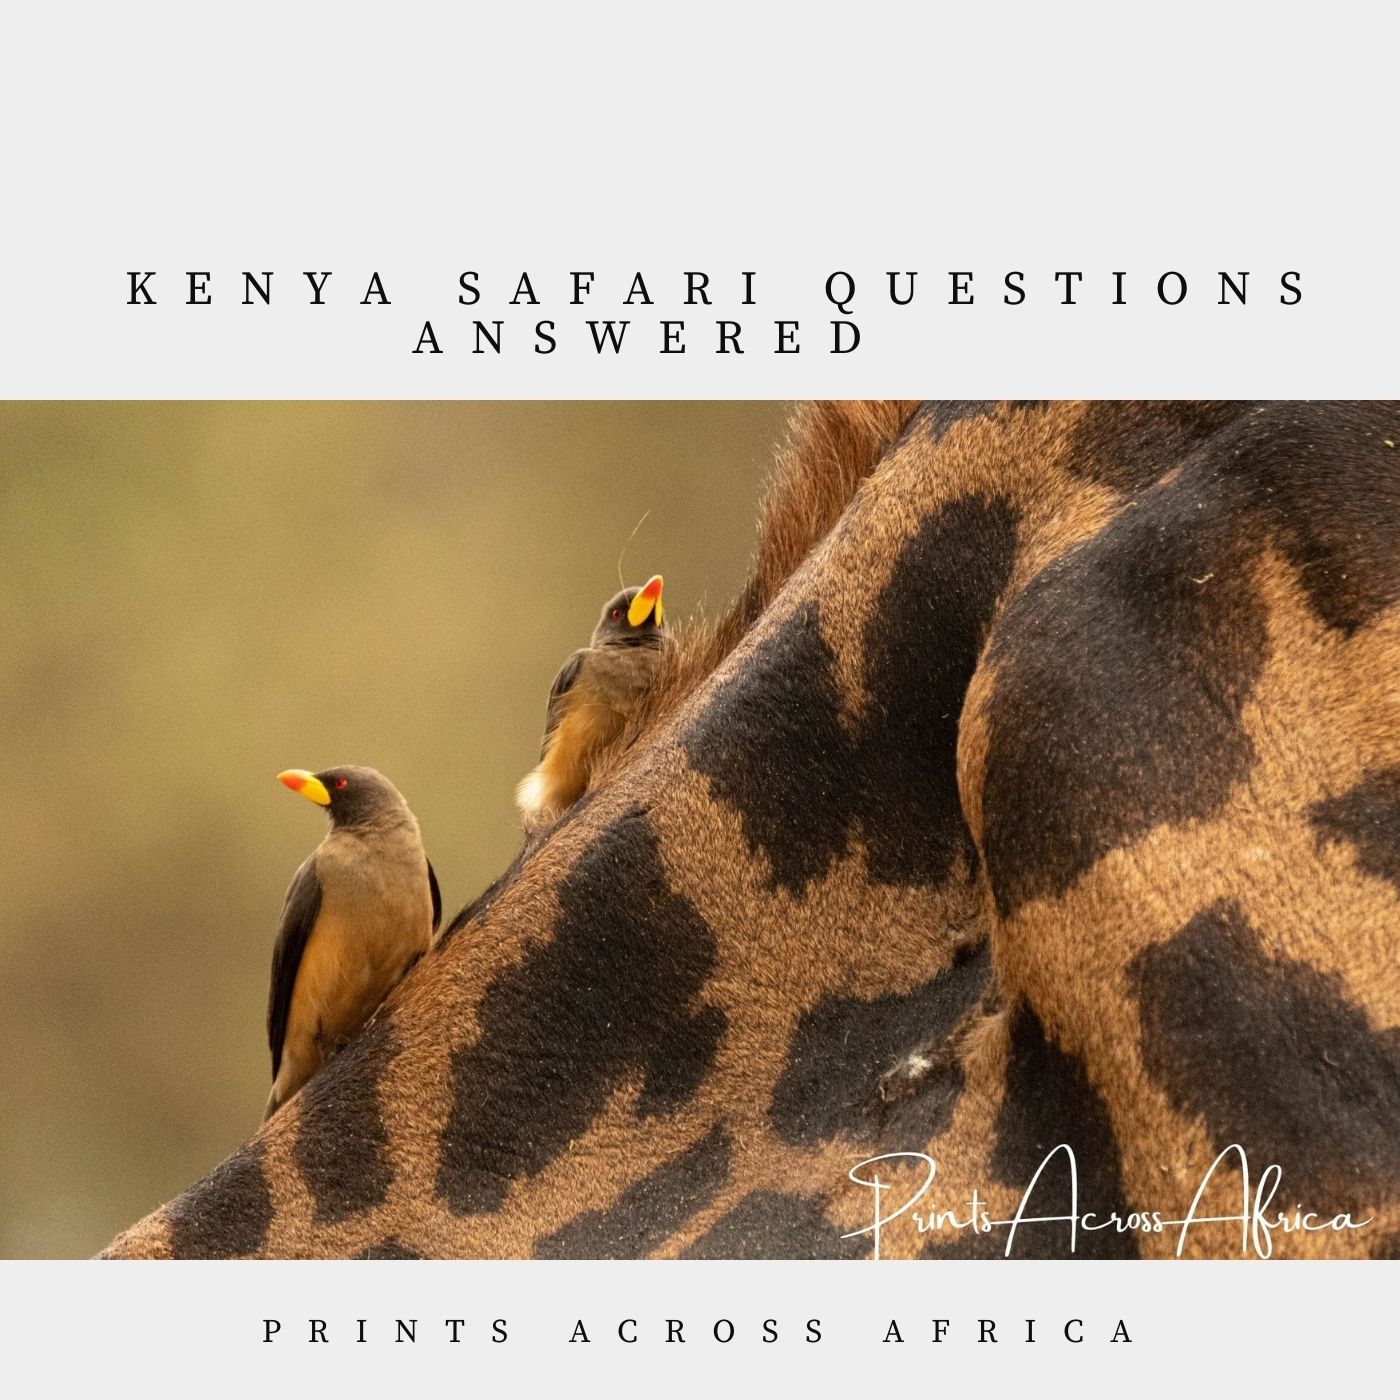 Kenya Safari Questions answered